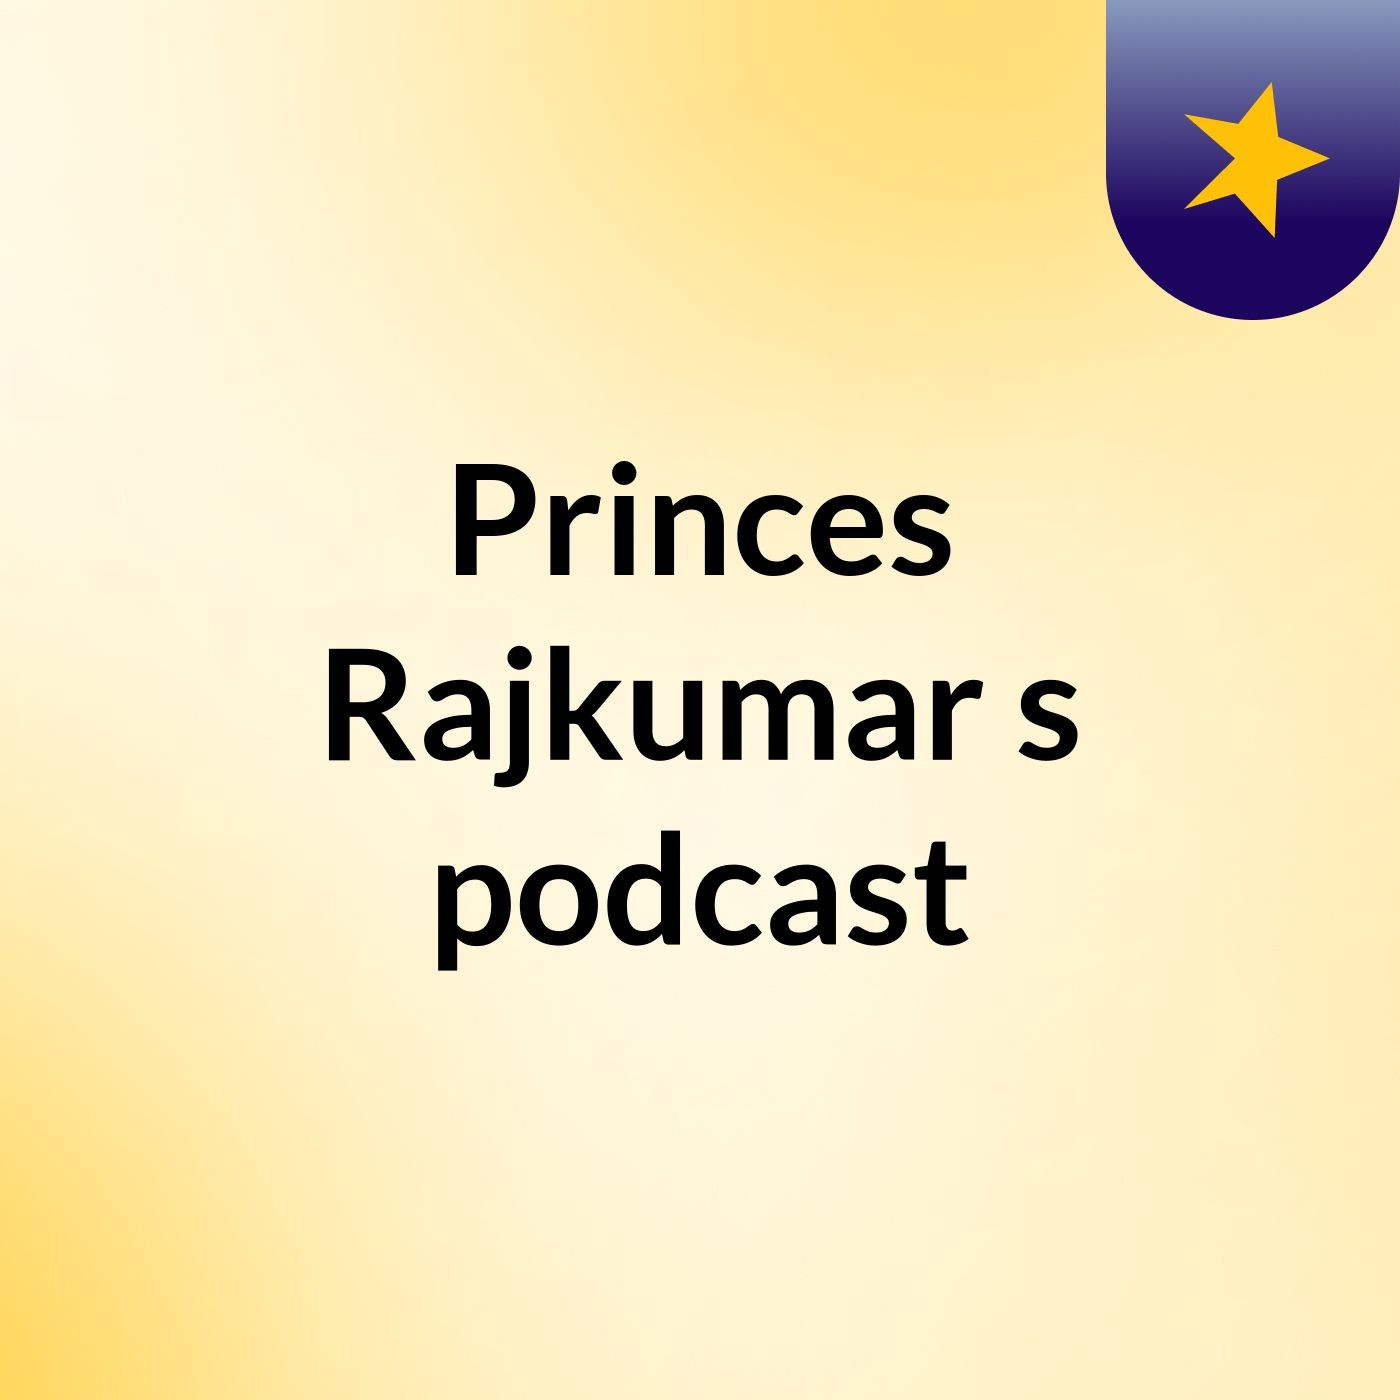 Princes Rajkumar's podcast